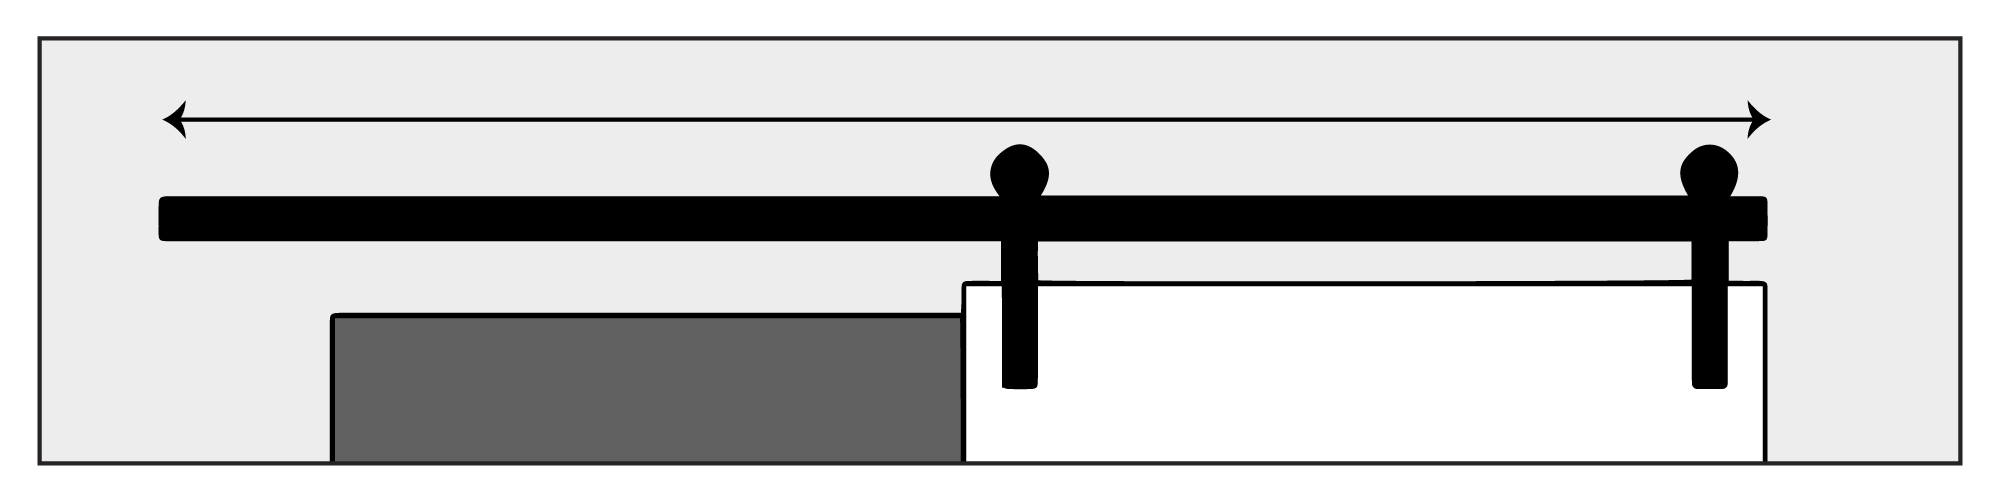 Sliding Door Rail Size Illustration